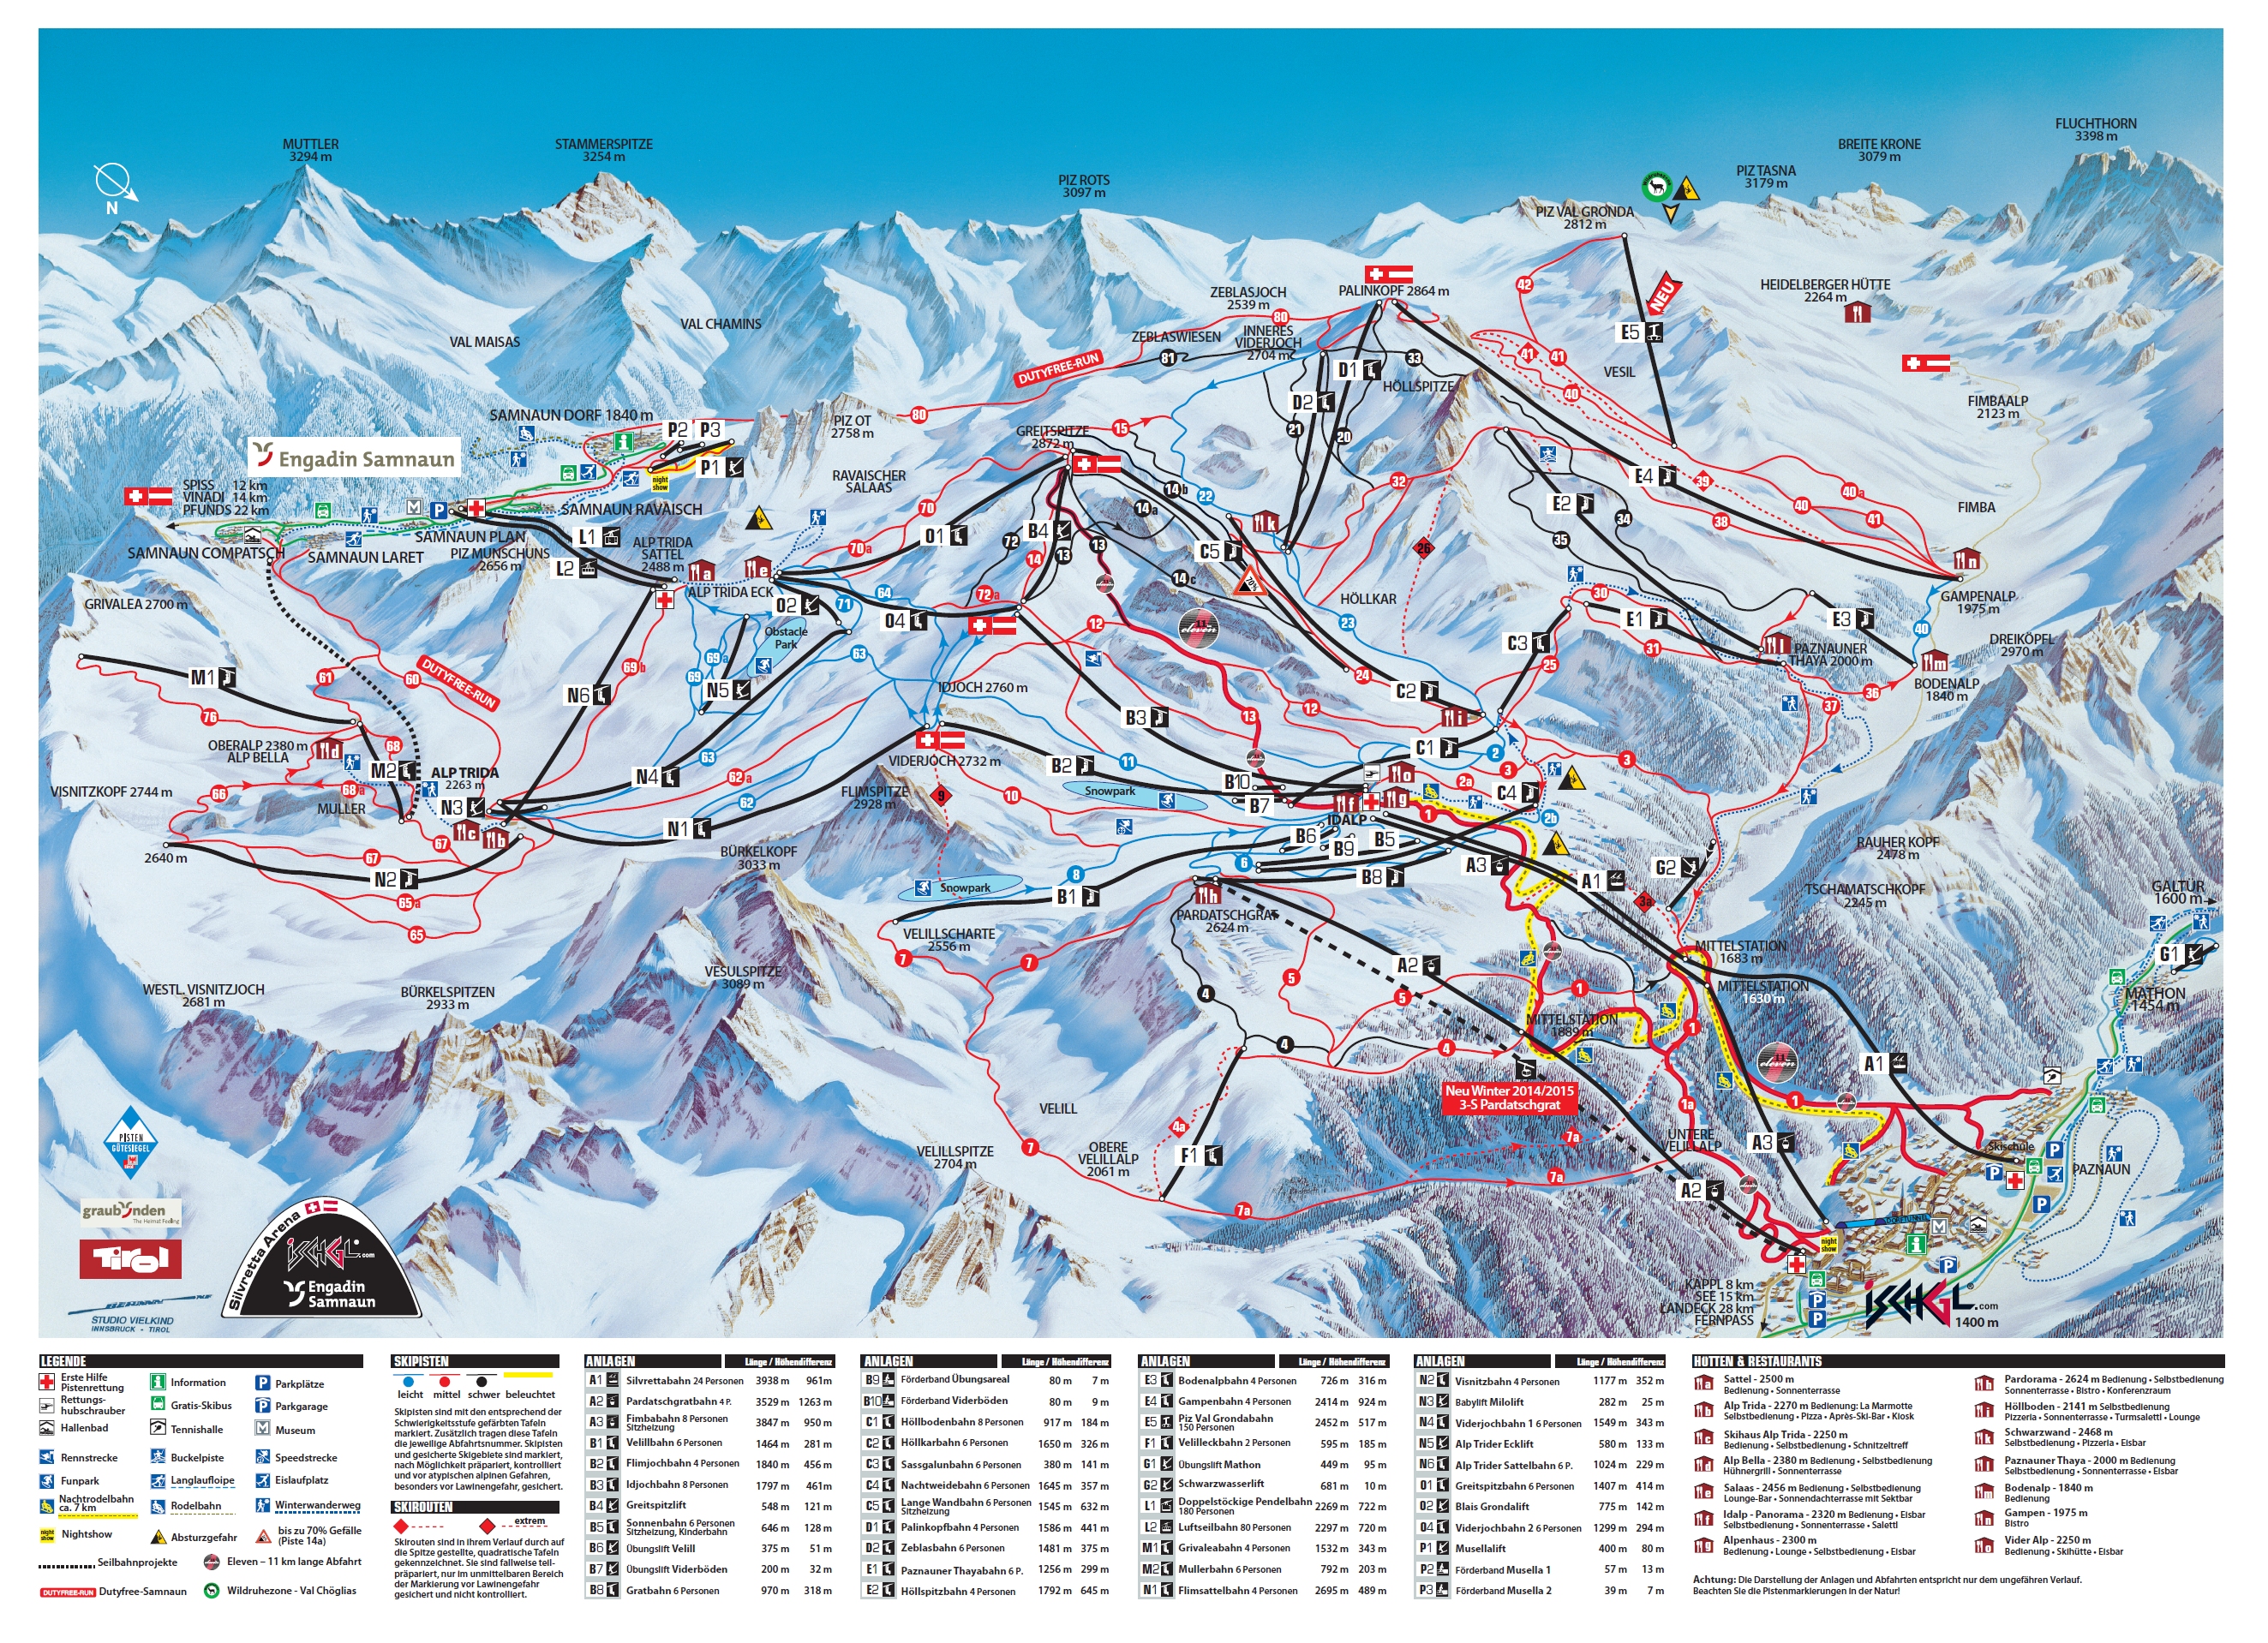 Ischgl by train - take the railway to ski or snowboard in Austria